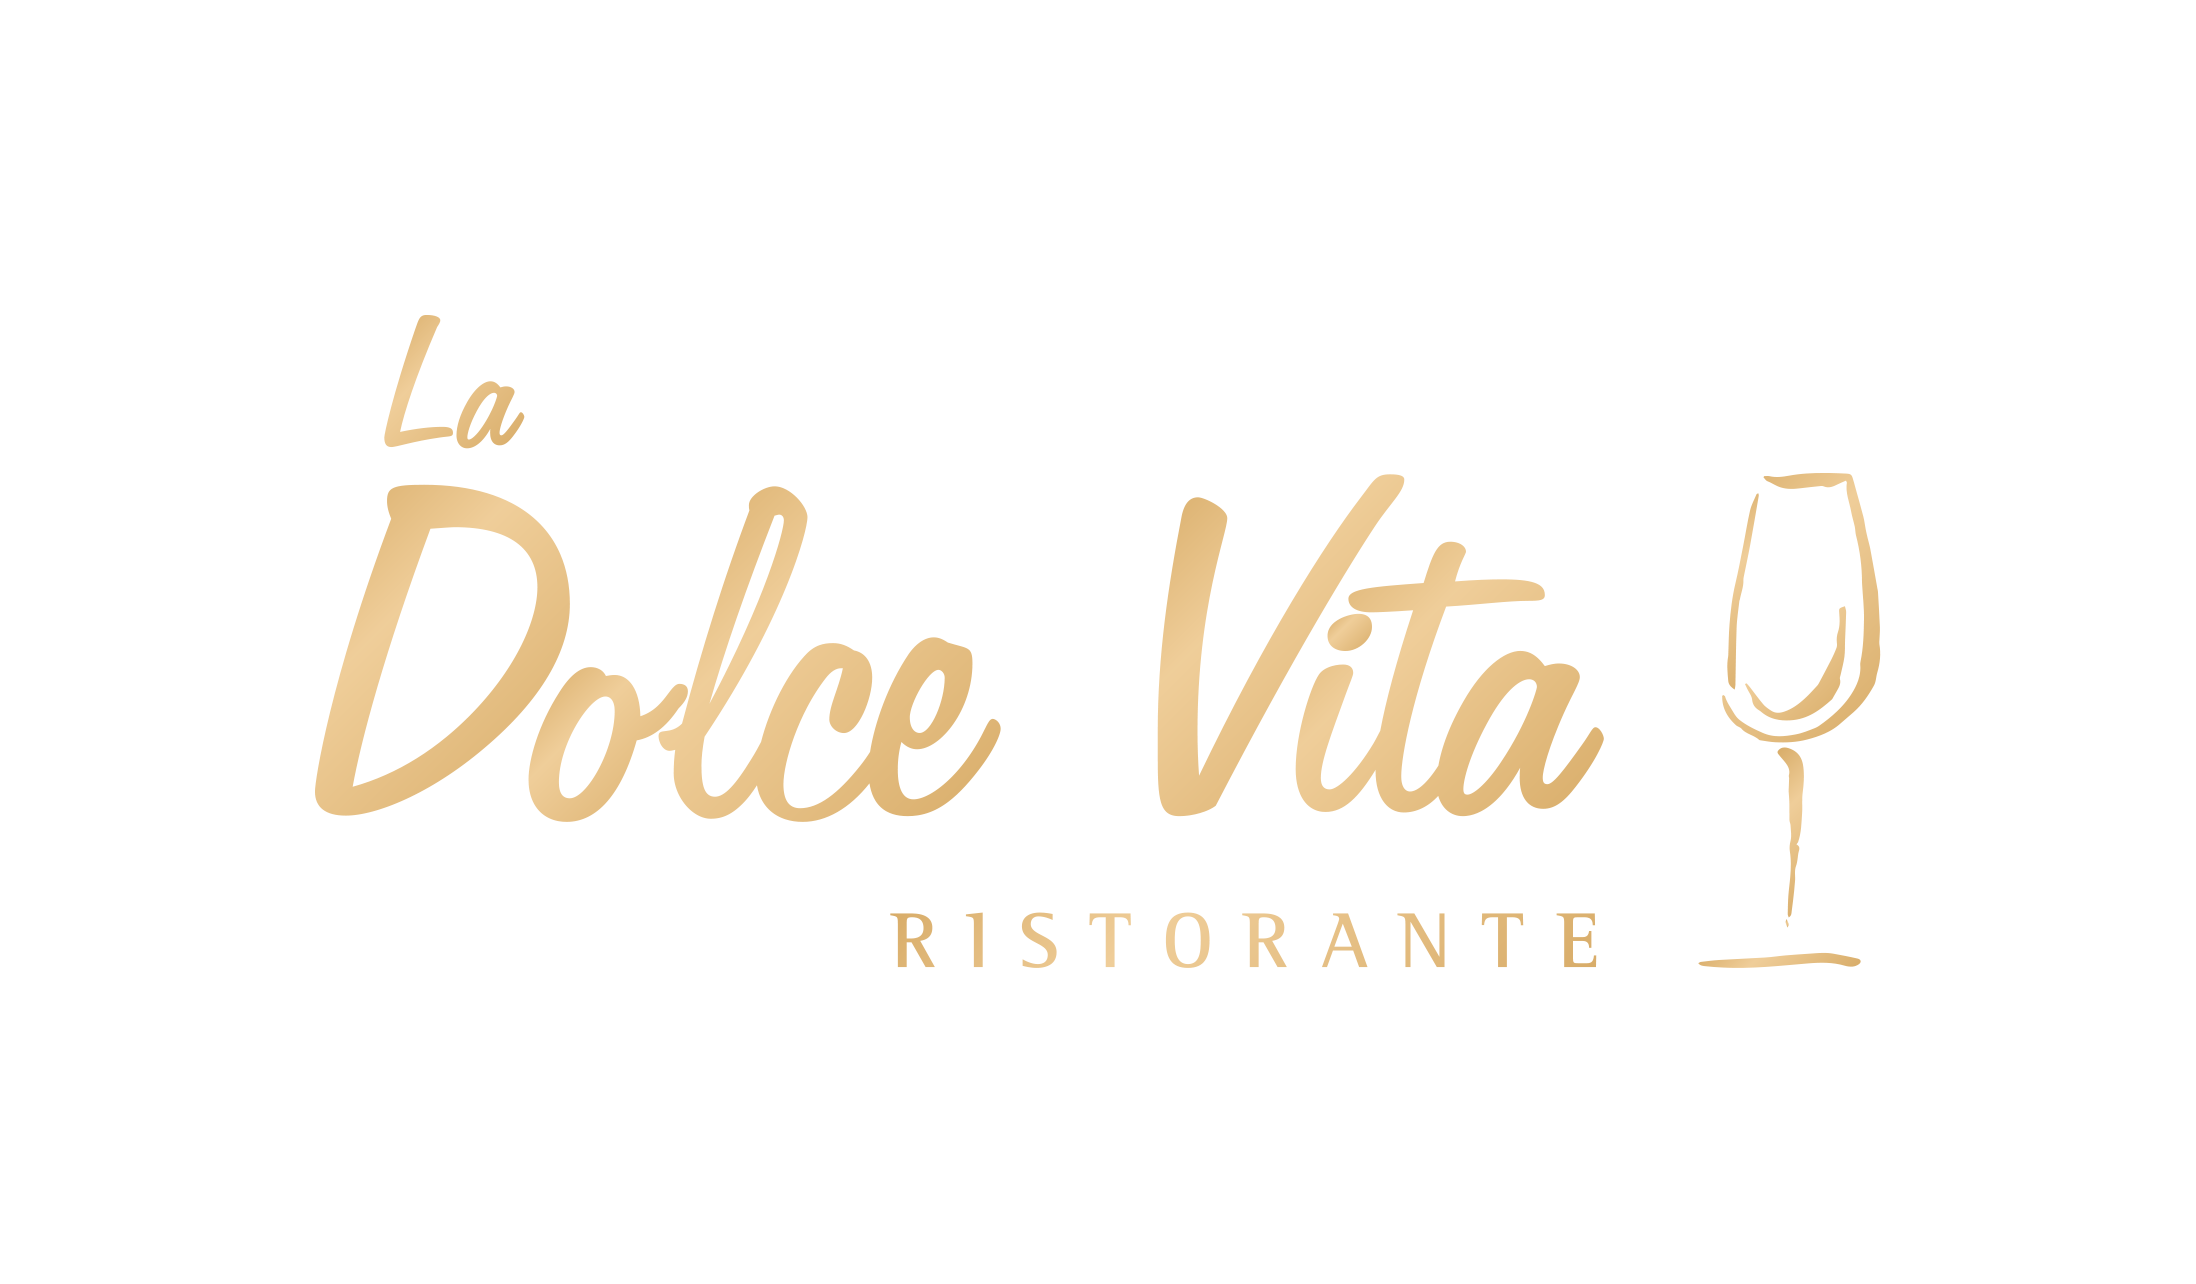 La Dolce Vita da Filo - Pizza, Pasta und mediterrane Kostlichkeiten